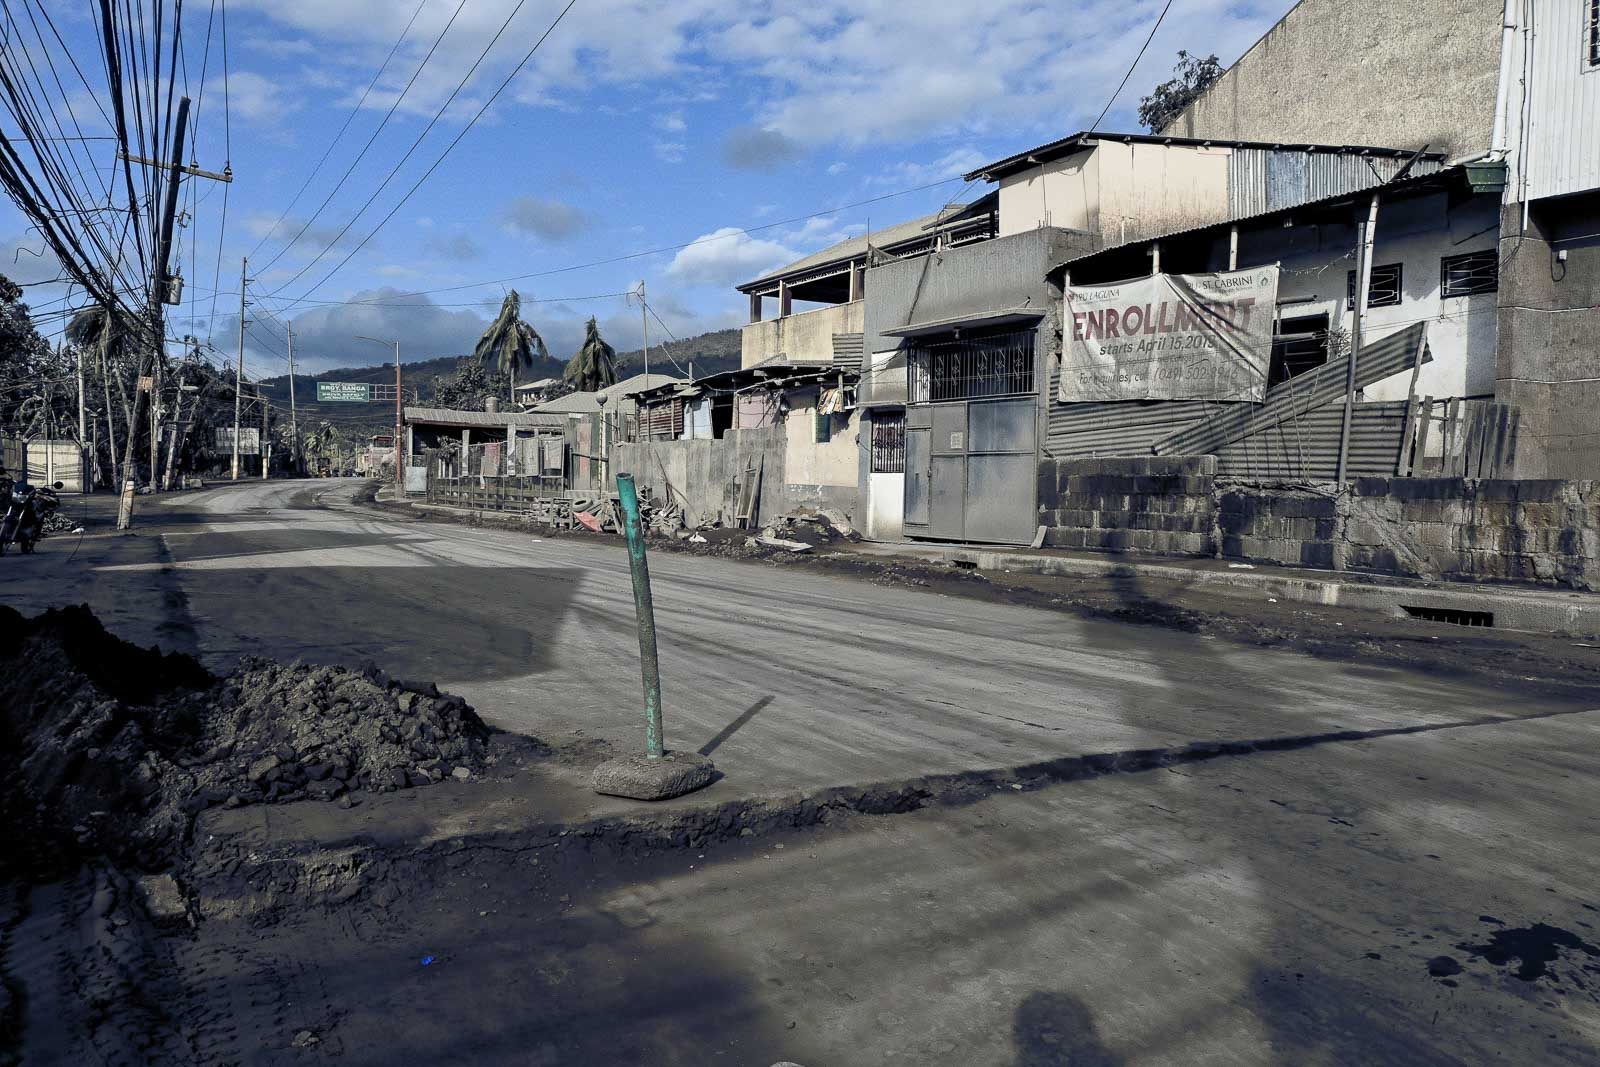 Comelec postpones voter registration in areas affected by Taal Volcano eruption